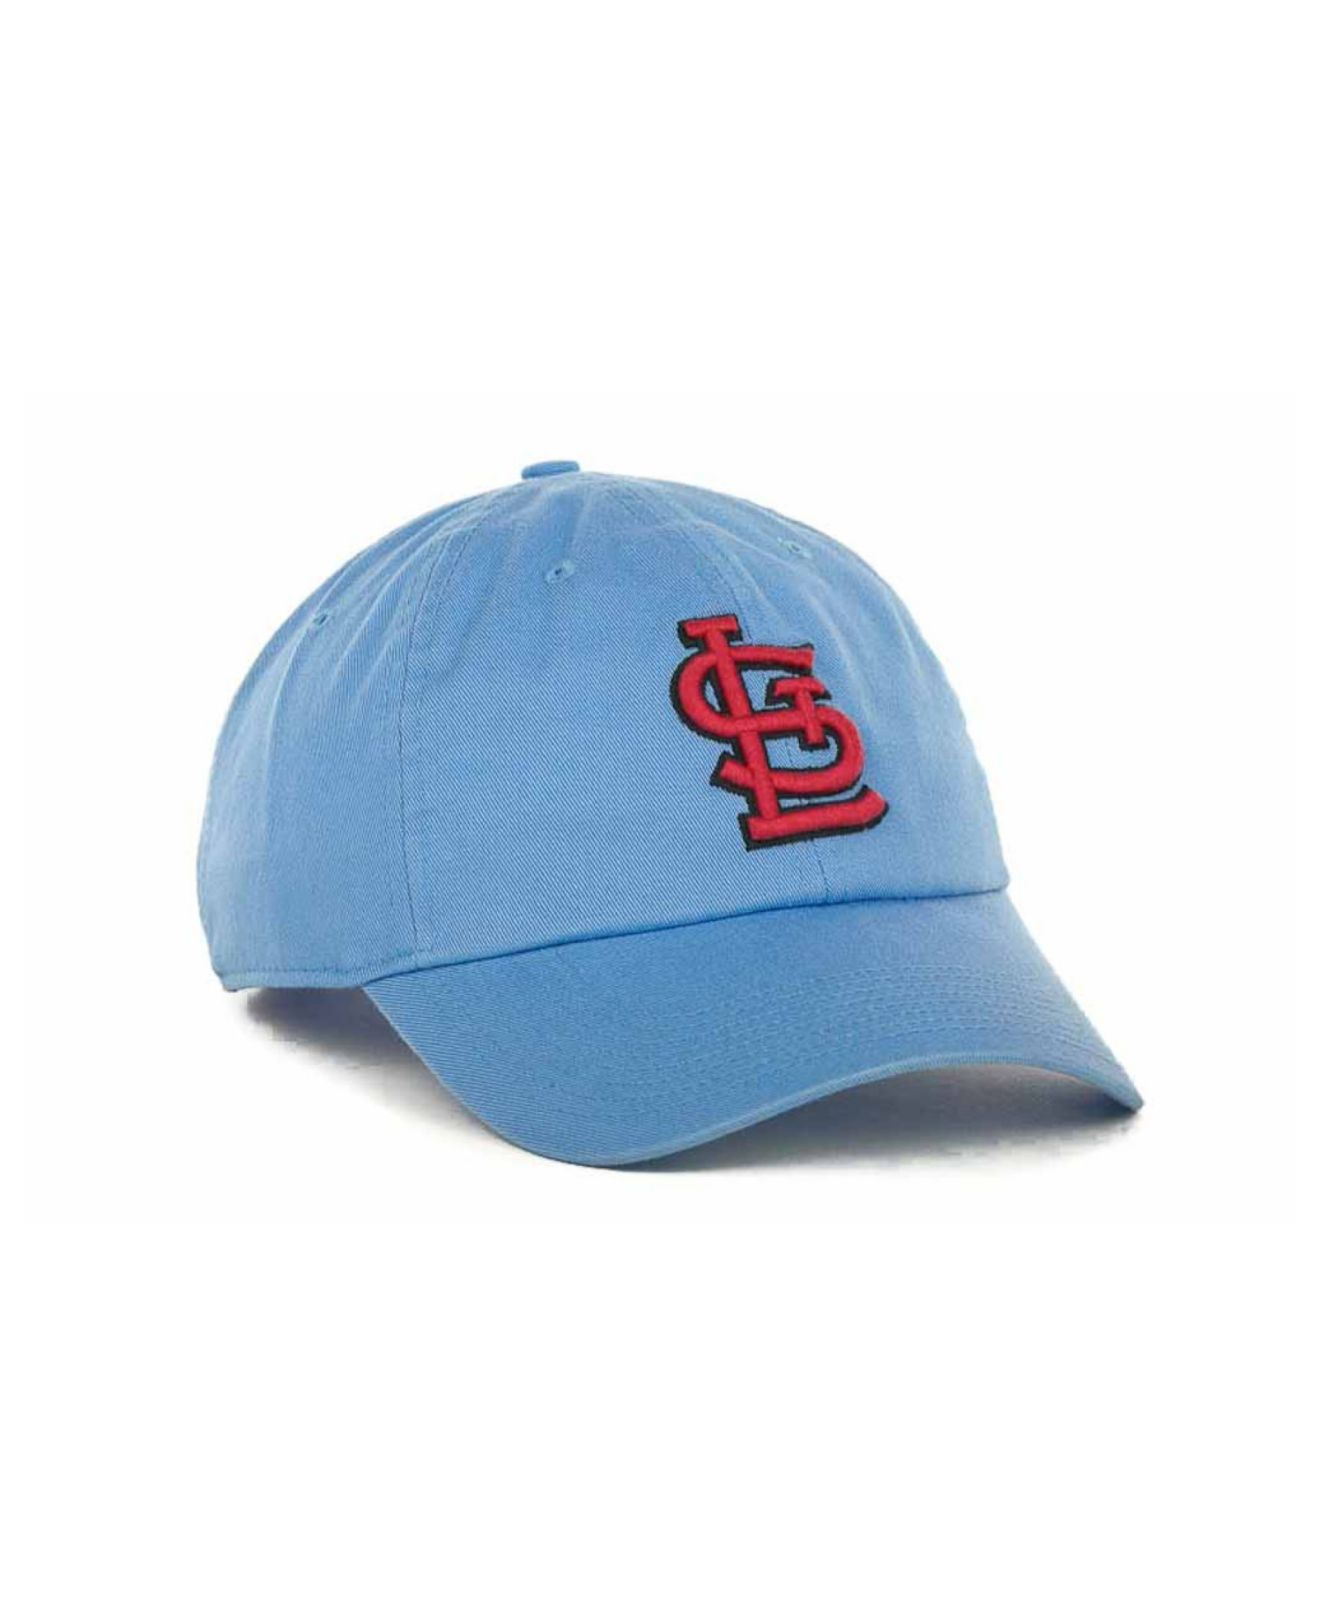 Men's St. Louis Cardinals '47 Light Blue Cooperstown Collection